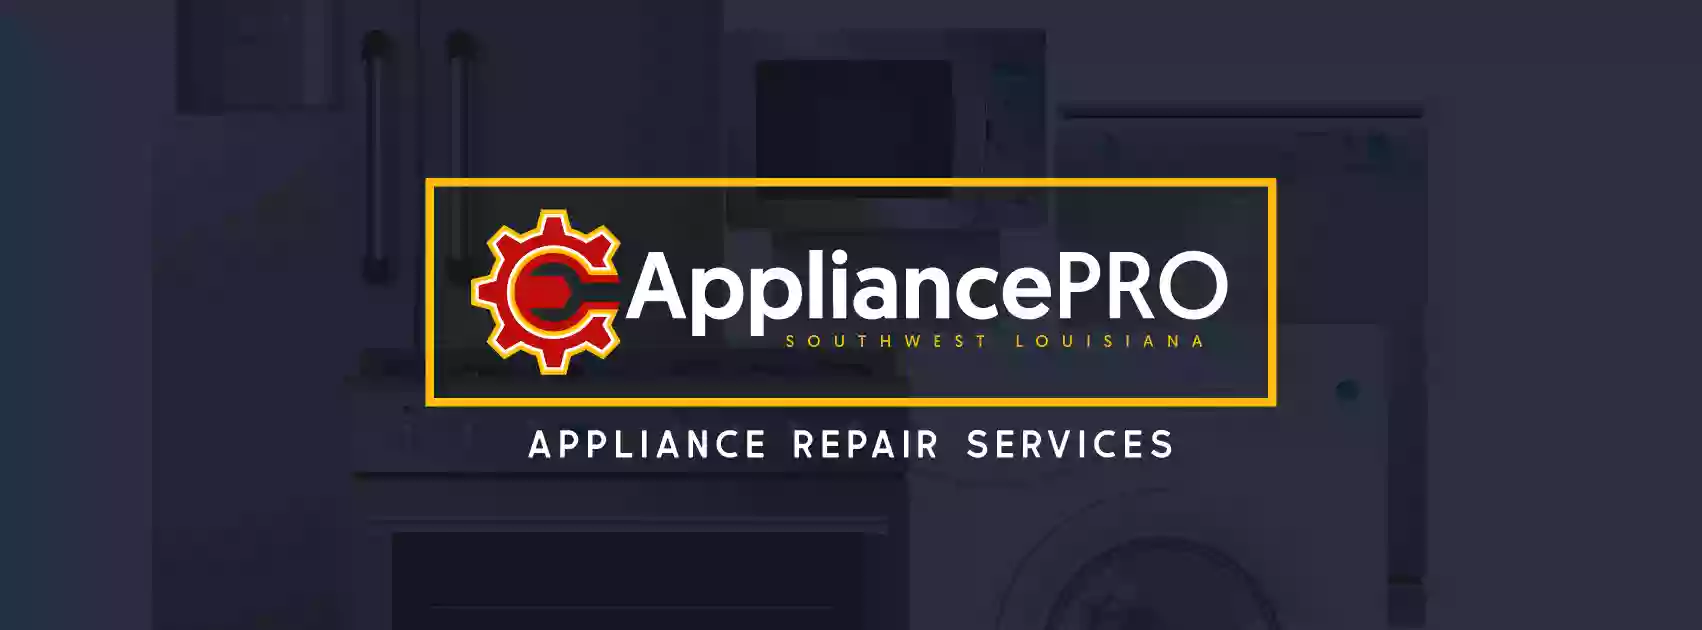 AppliancePro